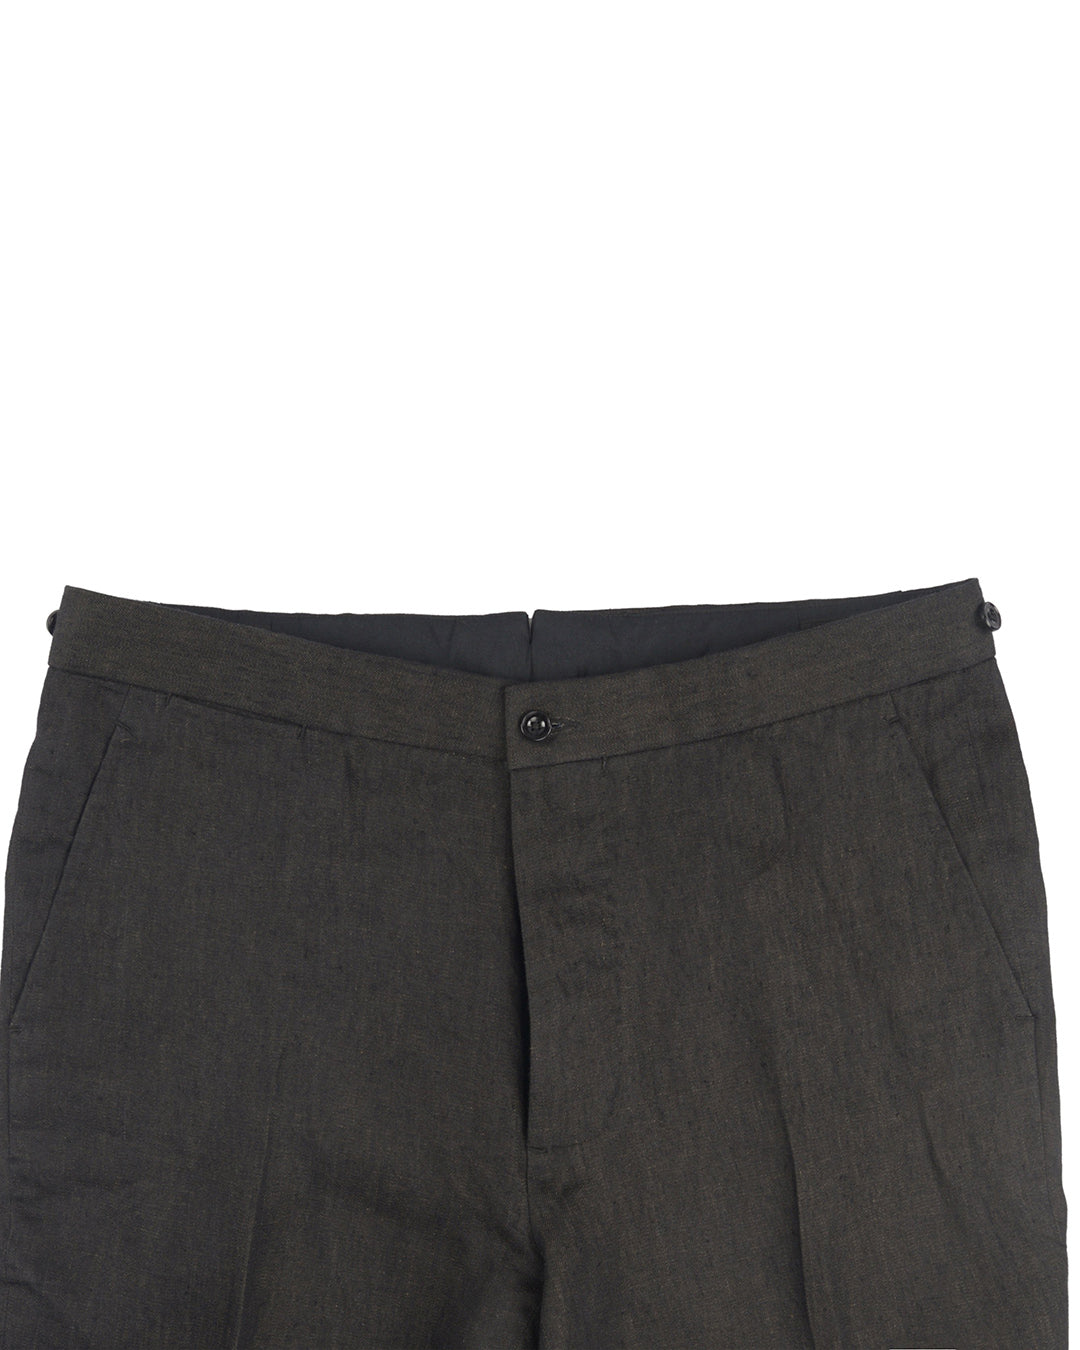 Linen: Dark Brown Herringbone Pants